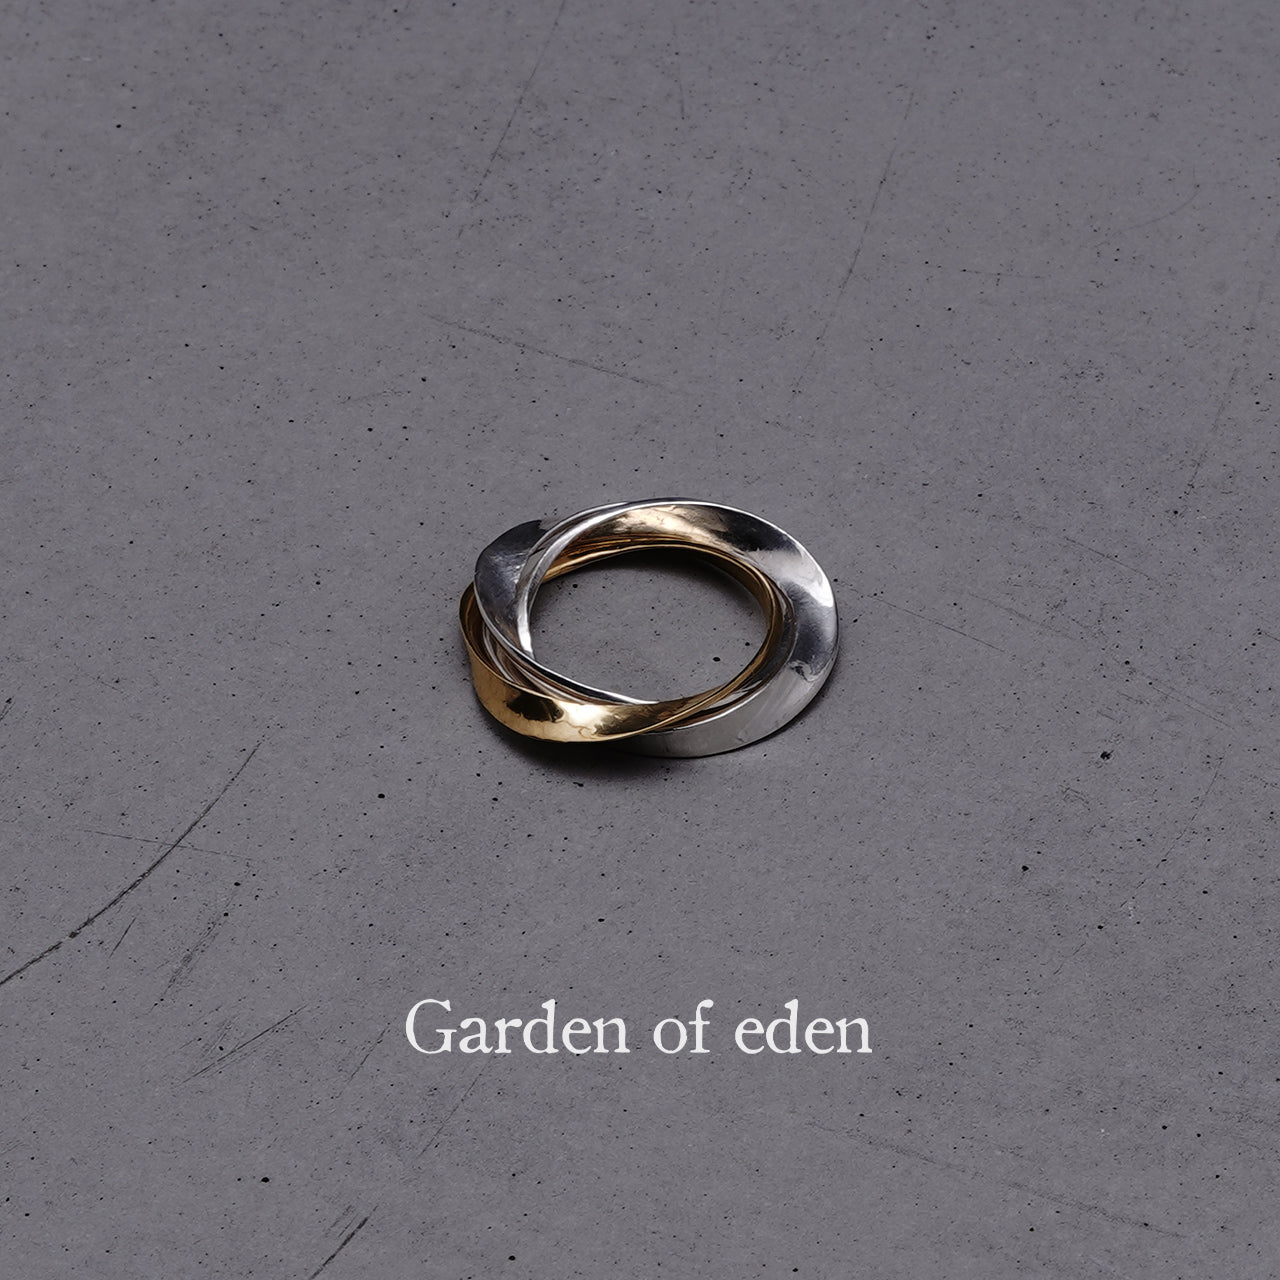 Garden of Eden ガーデンオブエデン  オーバル ギメル リング OVAL GIMMEL RING 18K シルバー925 ゴールド 指輪 アクセサリー  23SS038 【送料無料】